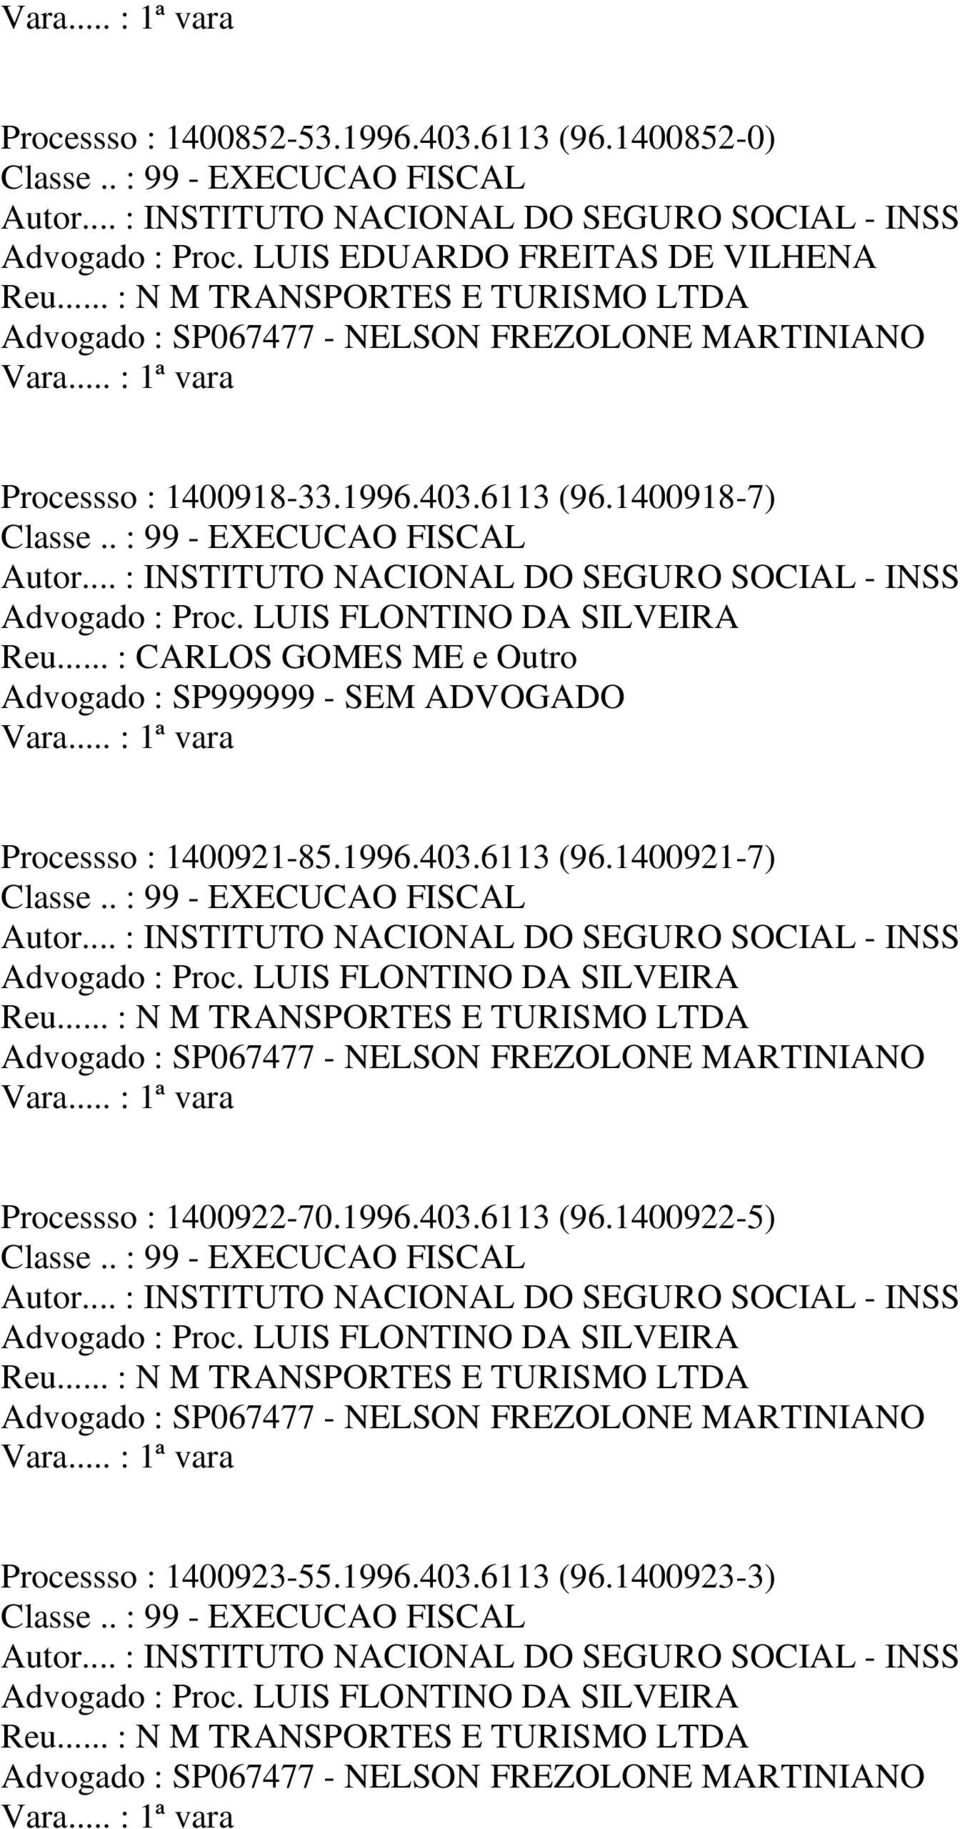 .. : N M TRANSPORTES E TURISMO LTDA Processso : 1400922-70.1996.403.6113 (96.1400922-5) Reu.